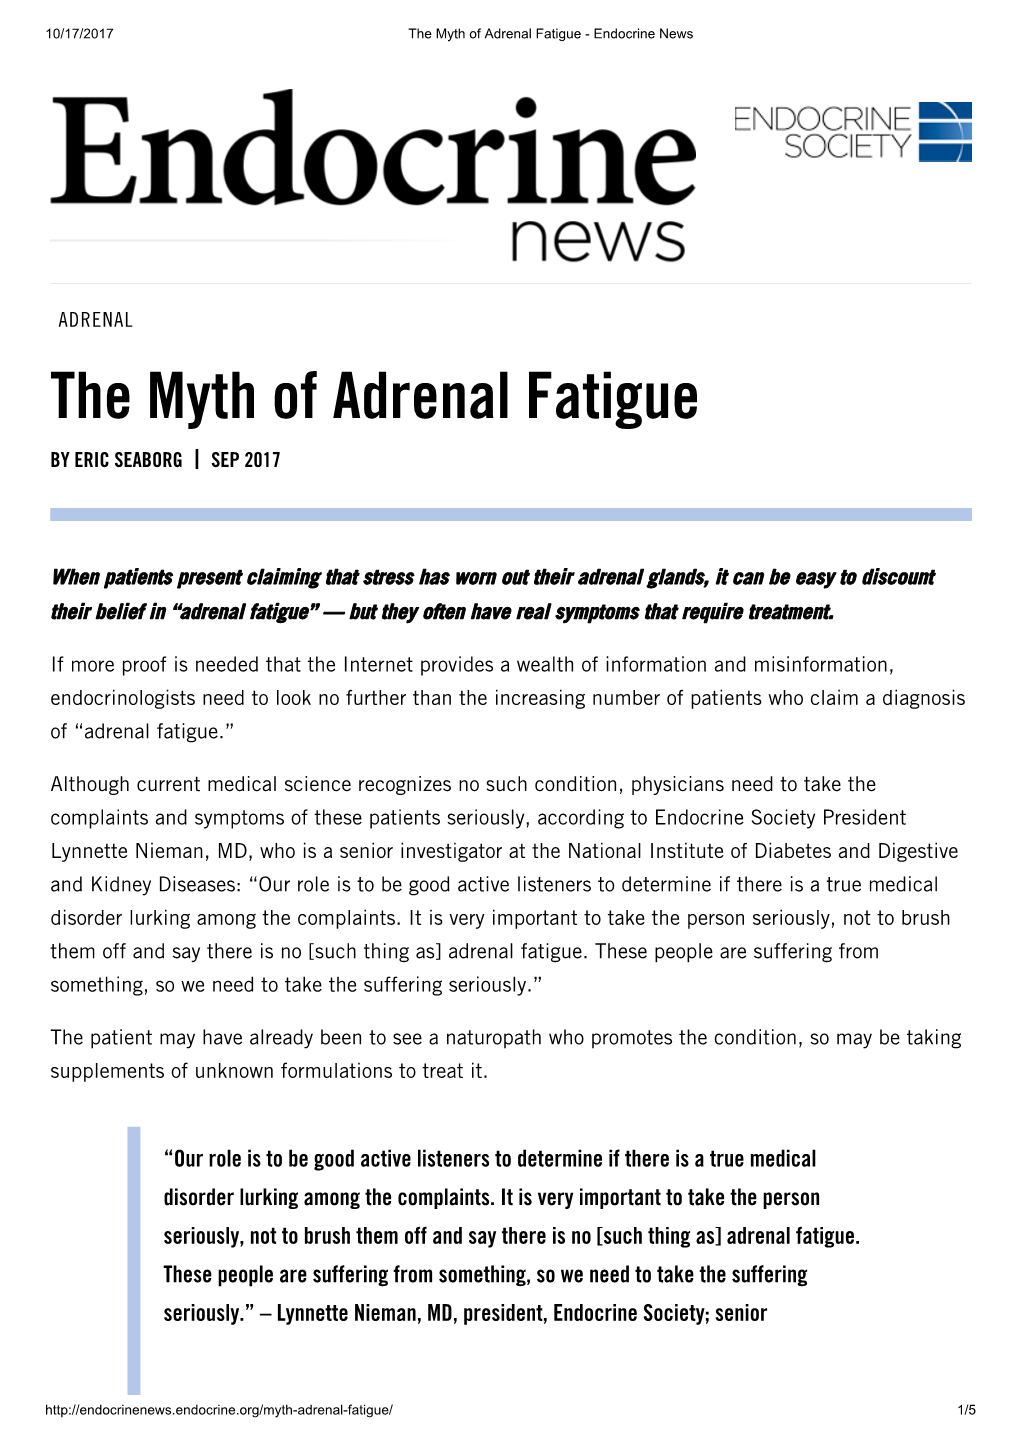 The Myth of Adrenal Fatigue - Endocrine News